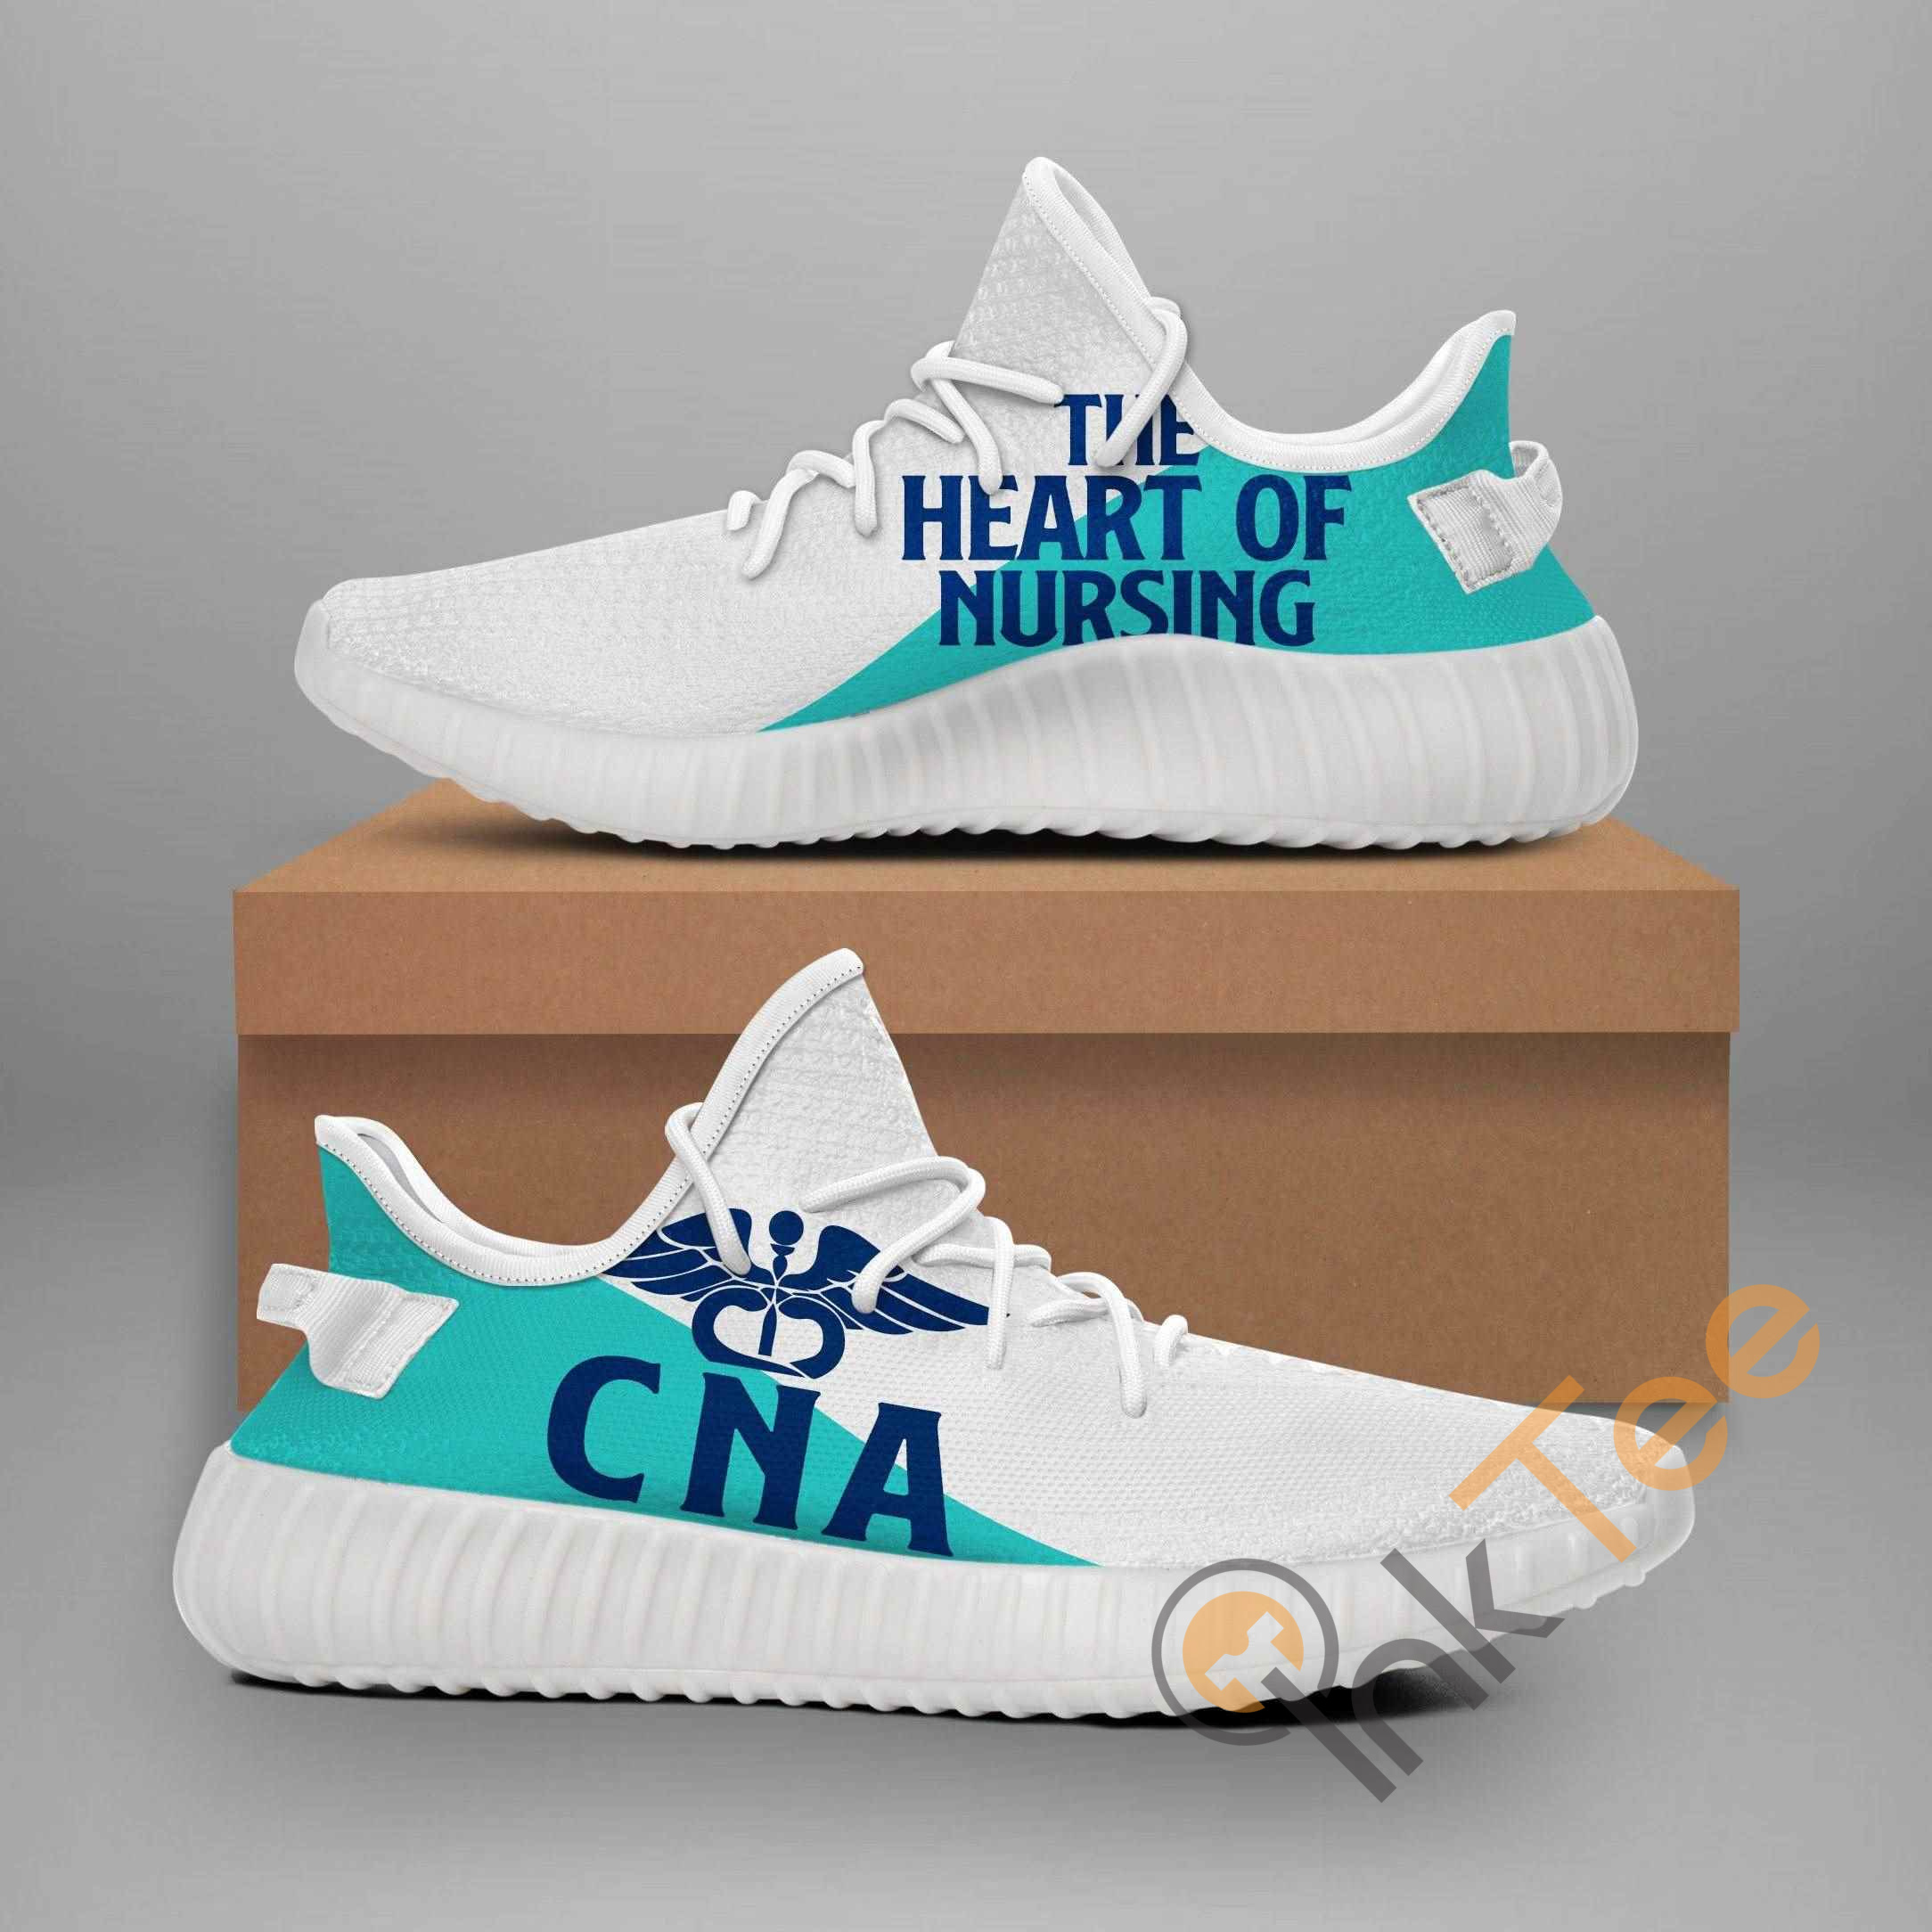 North Carolina Cna 2 Nurse Amazon Best 